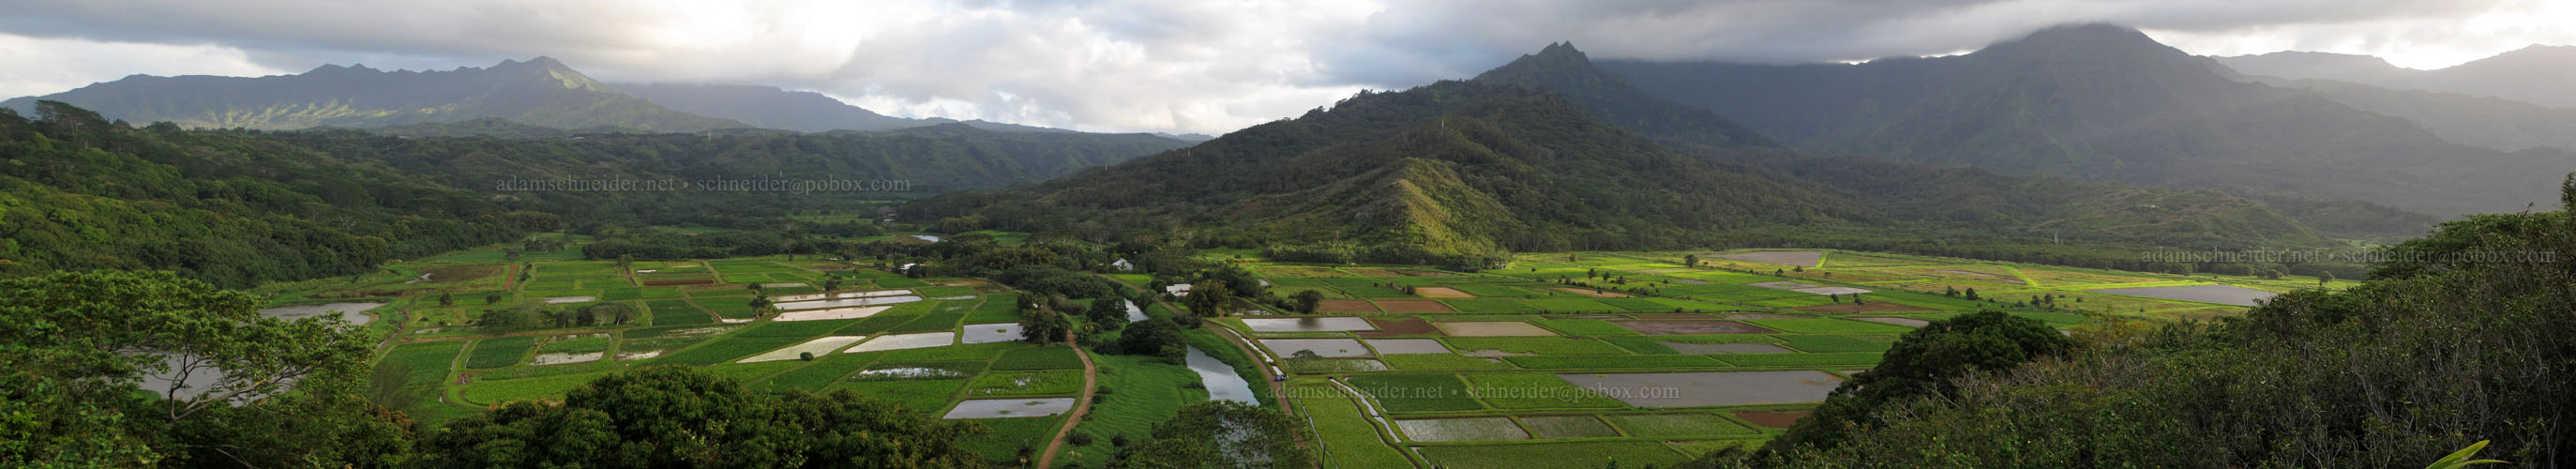 Hanalei Valley panorama [Hanalei Lookout, Princeville, Kaua'i, Hawaii]